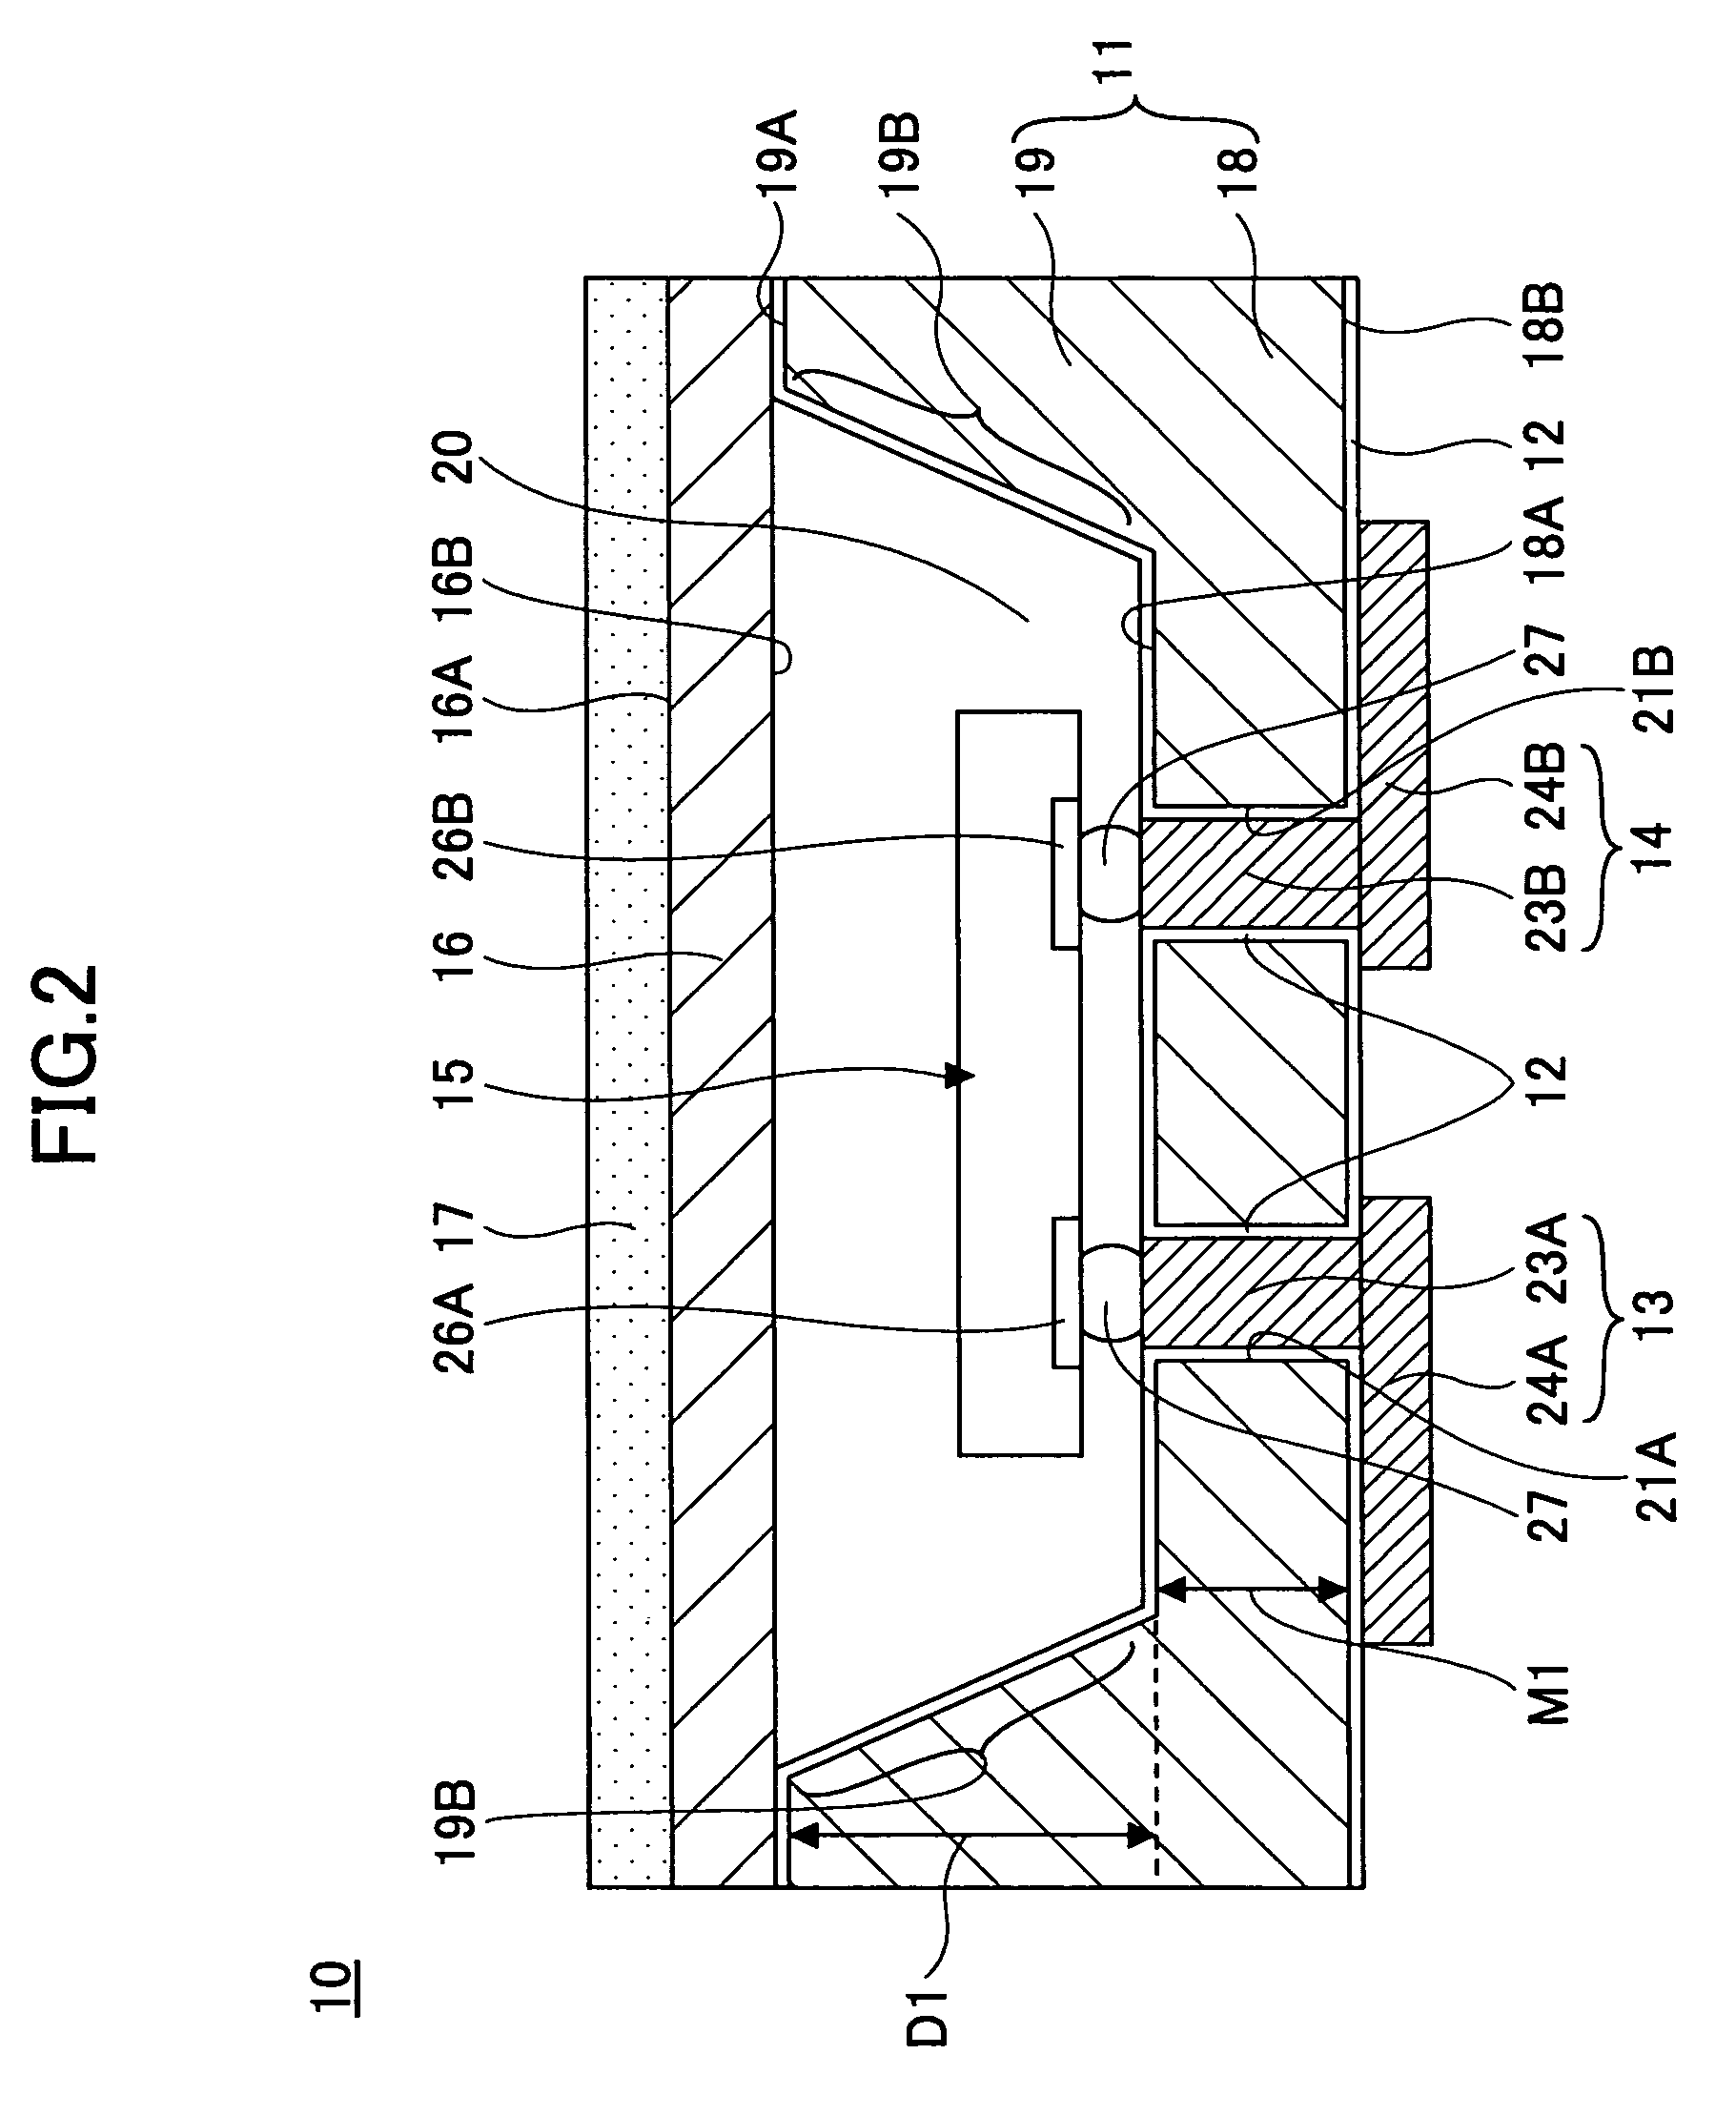 Method of producing light emitting apparatus